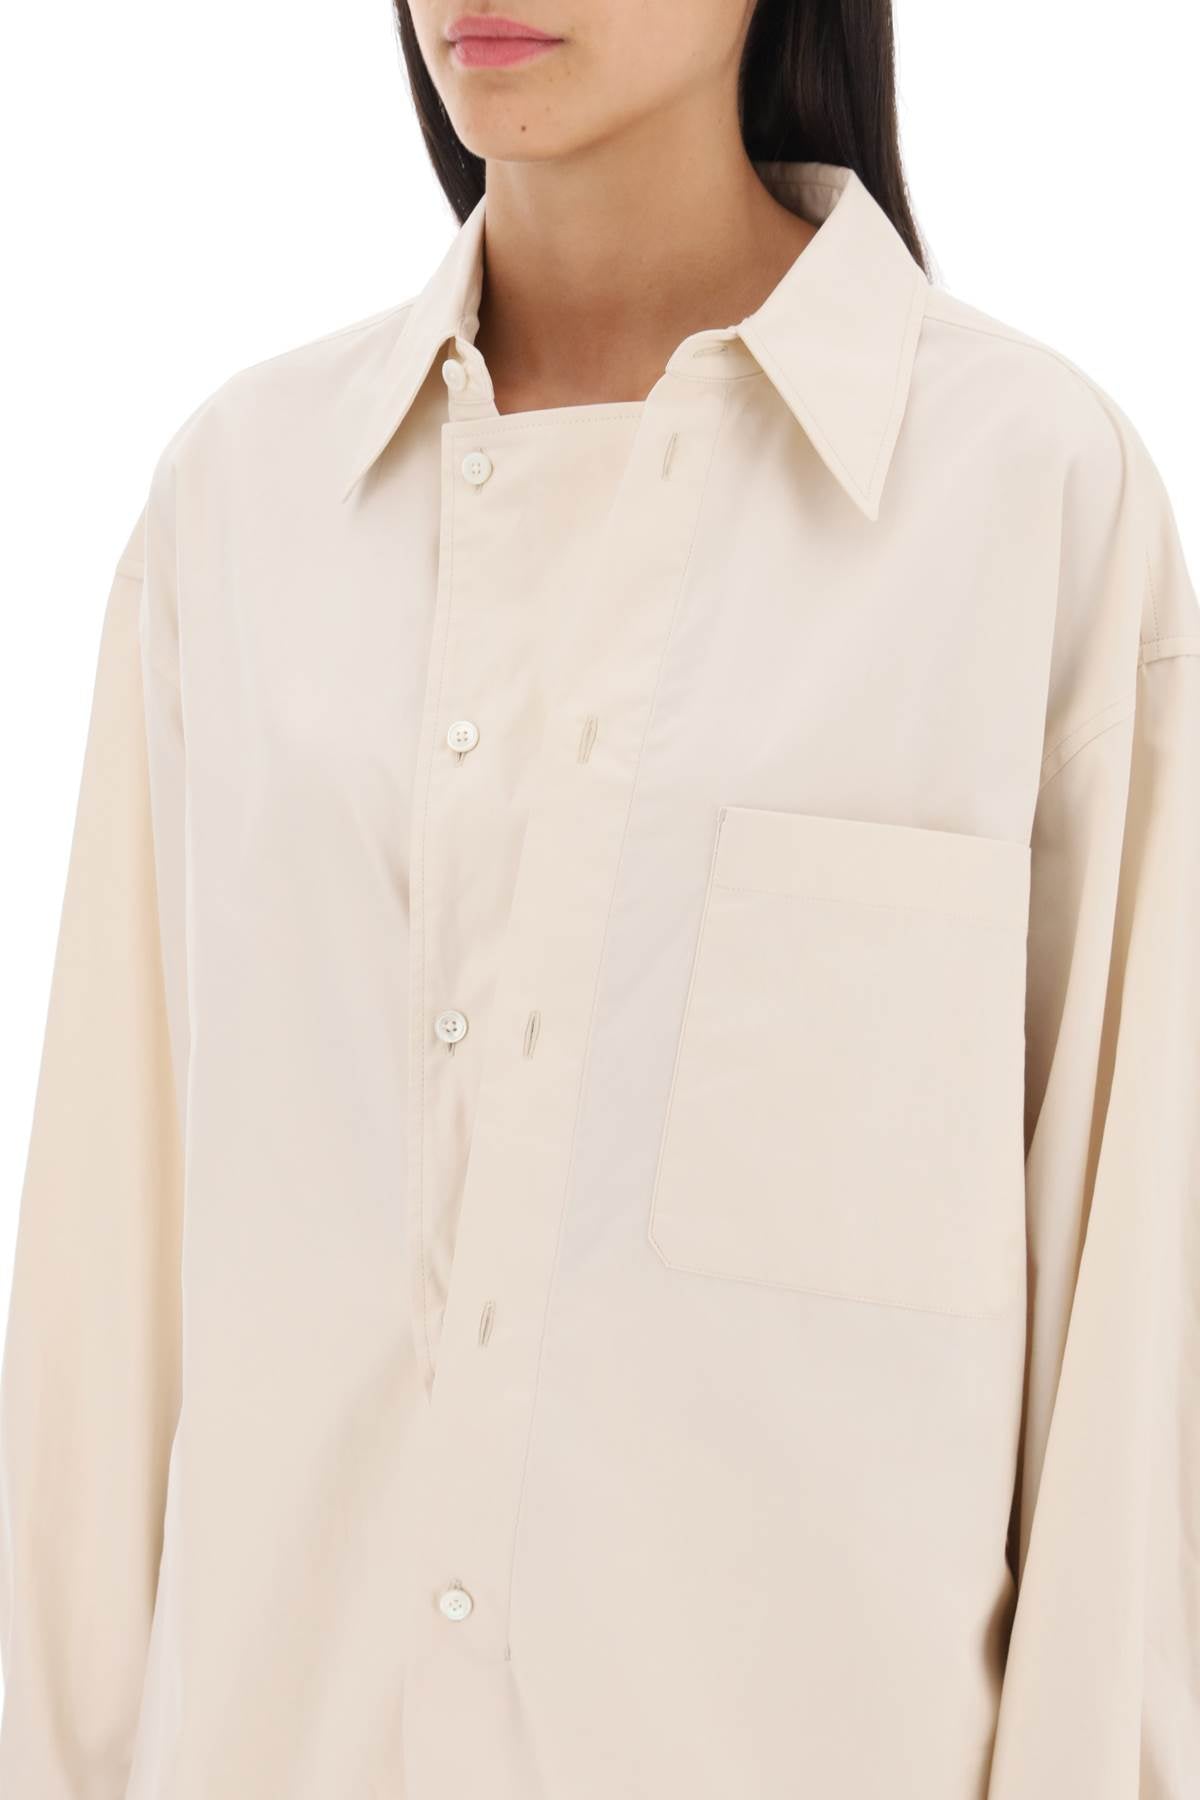 Lemaire oversized shirt in poplin-3